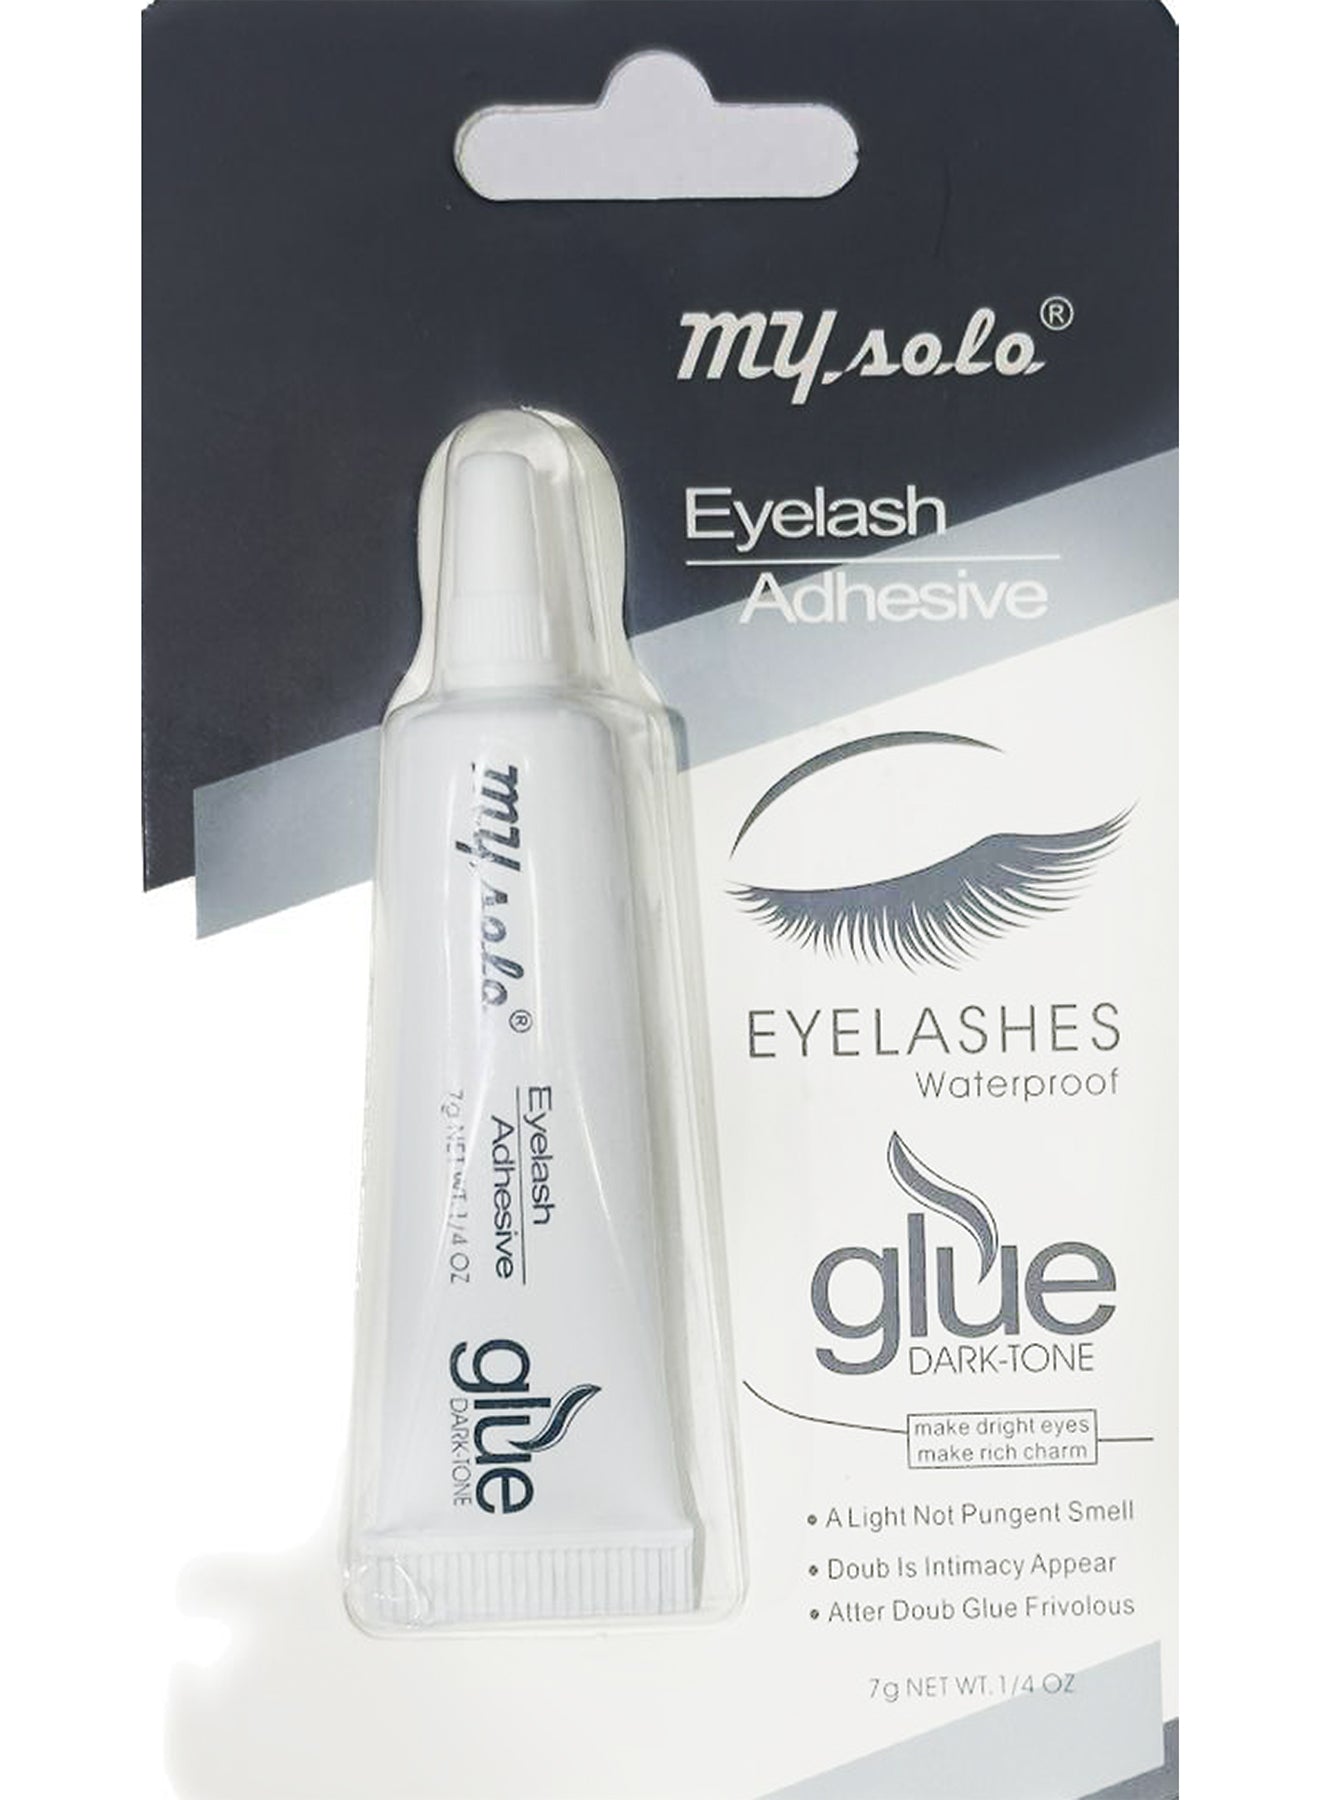 Mysolo Eyelash Adhesive Glue DarkTone 7g Value Pack of 12 